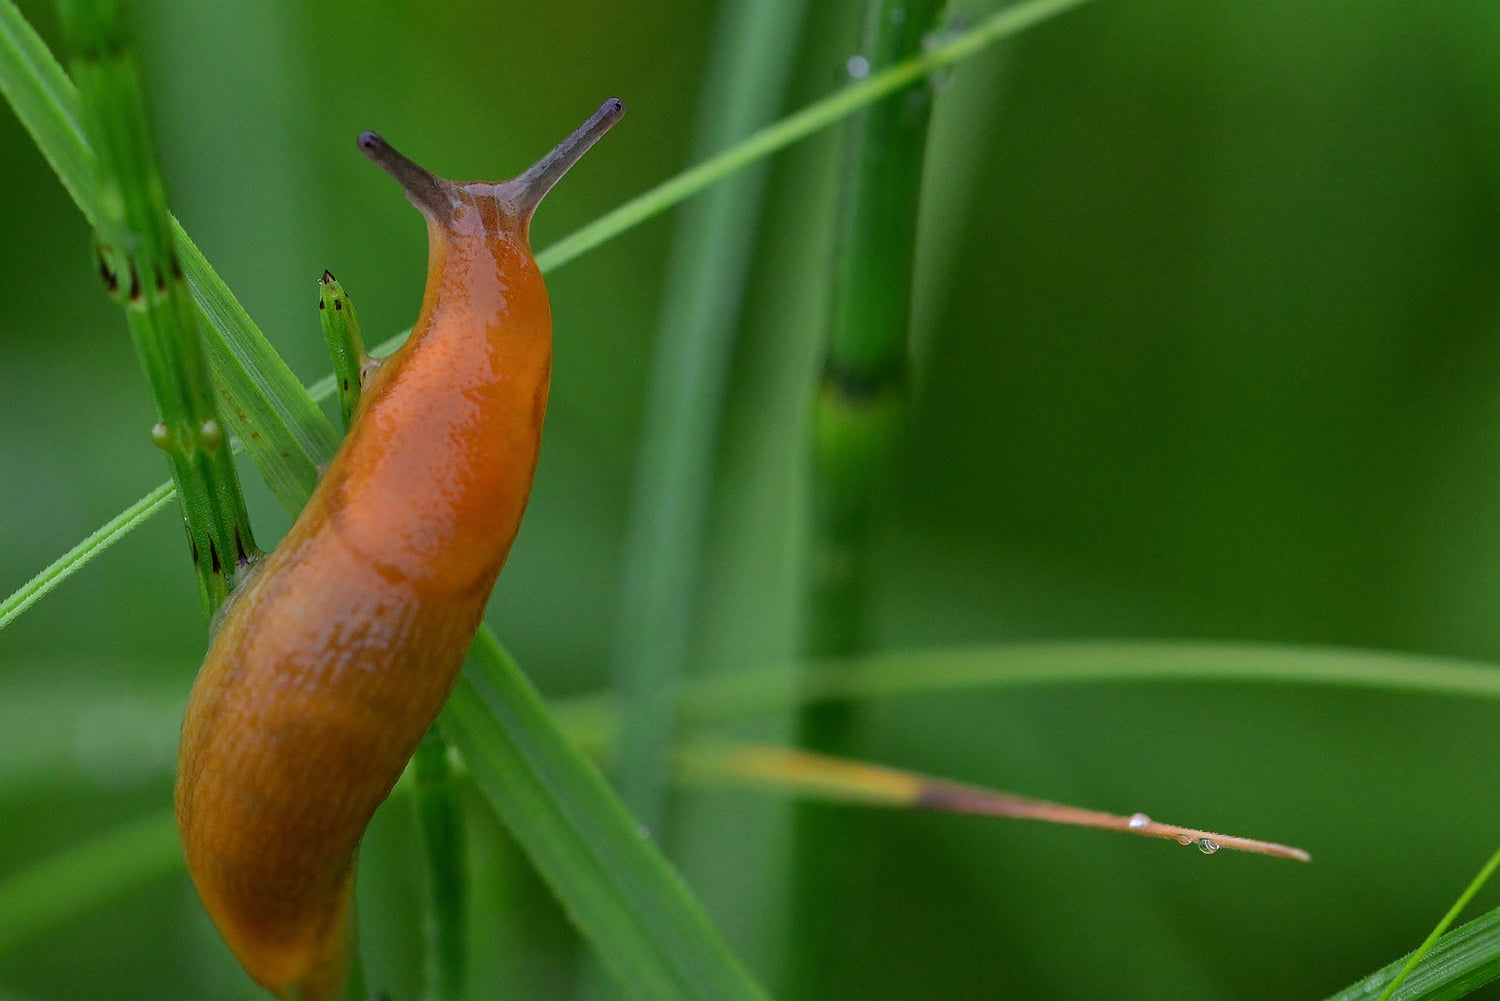 Slug Infestation - How to get rid of slugs and snails